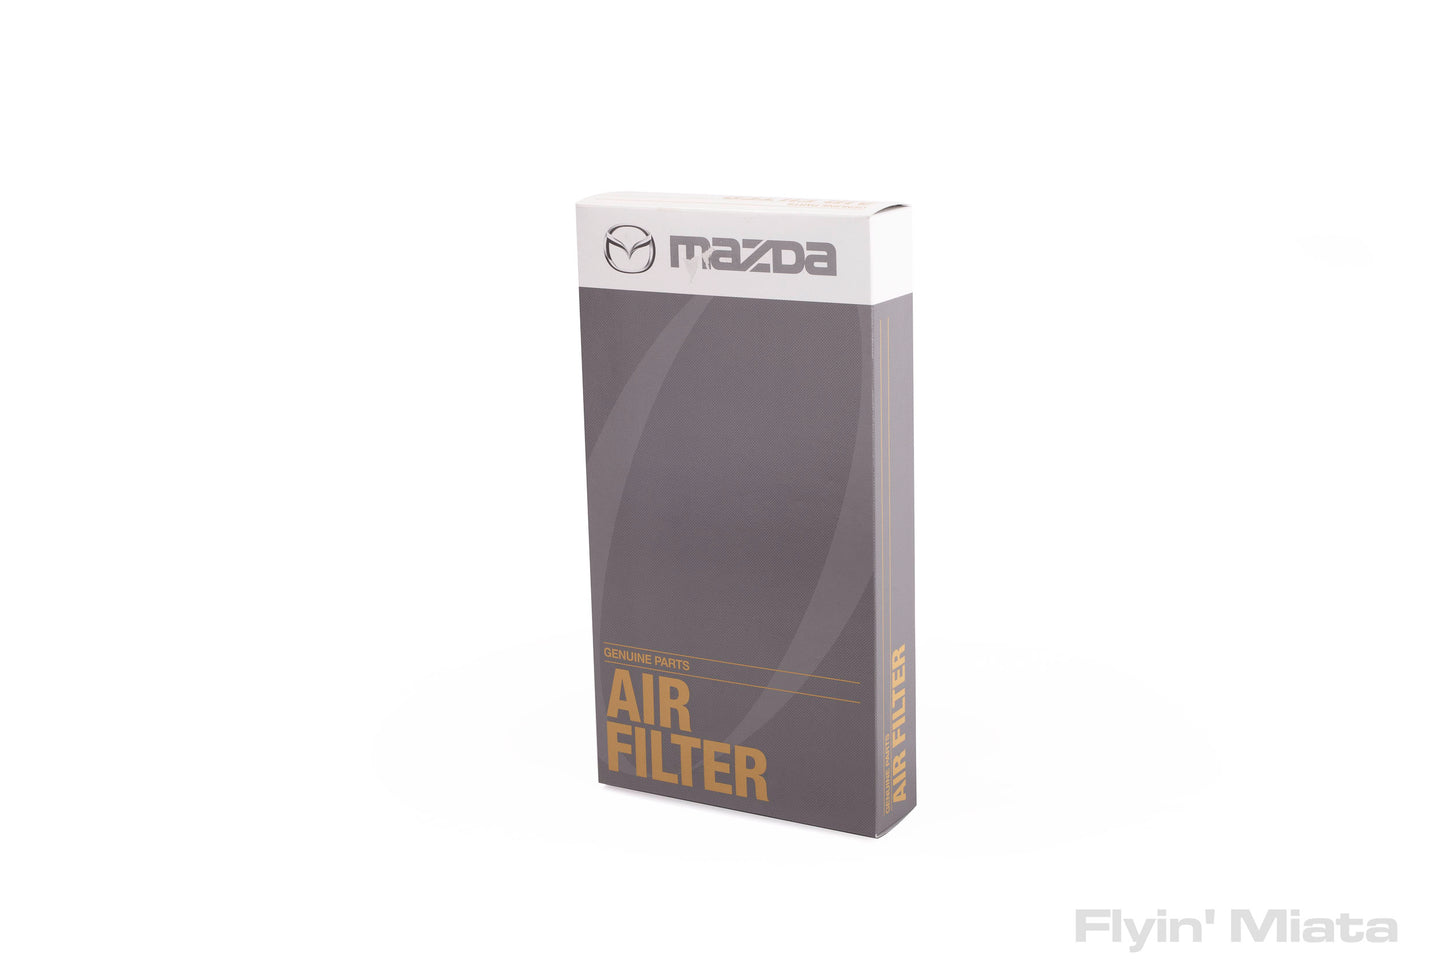 Mazda air filter for 2006-2015